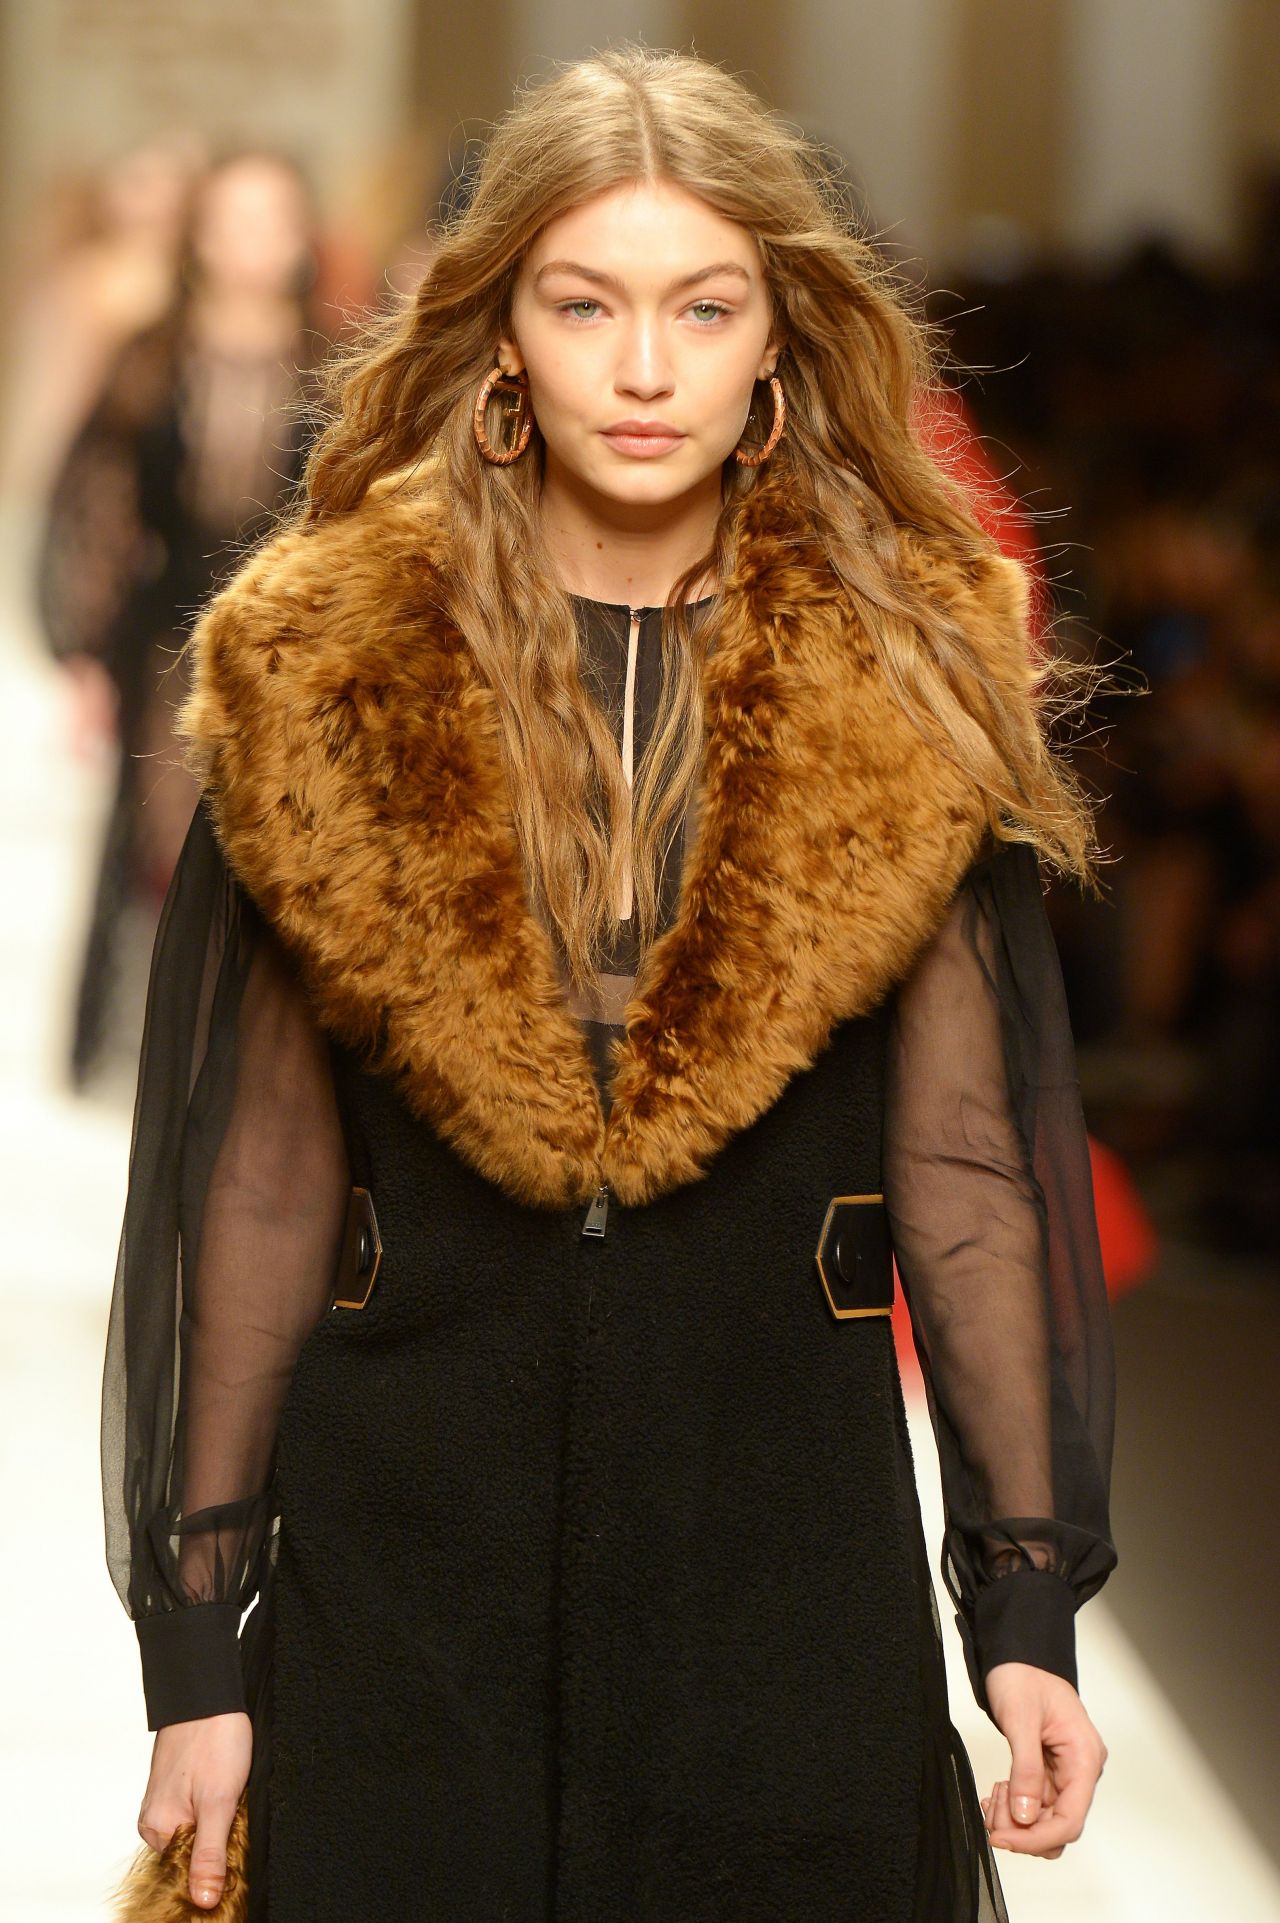 Gigi Hadid Supermodel Runway Walk at Milan Fashion Week - Fendi Show 2 ...